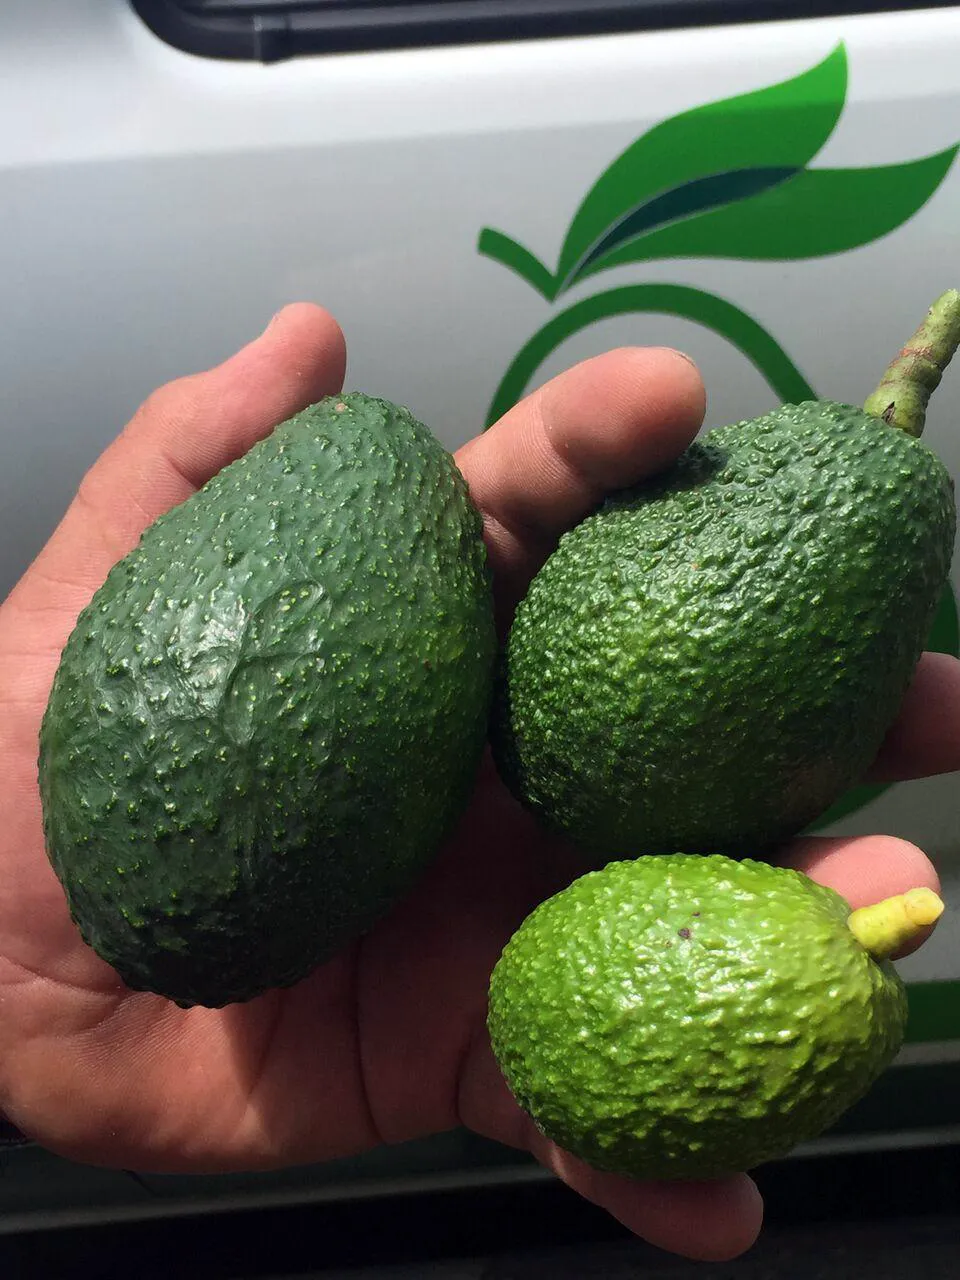 Hand holding avocados